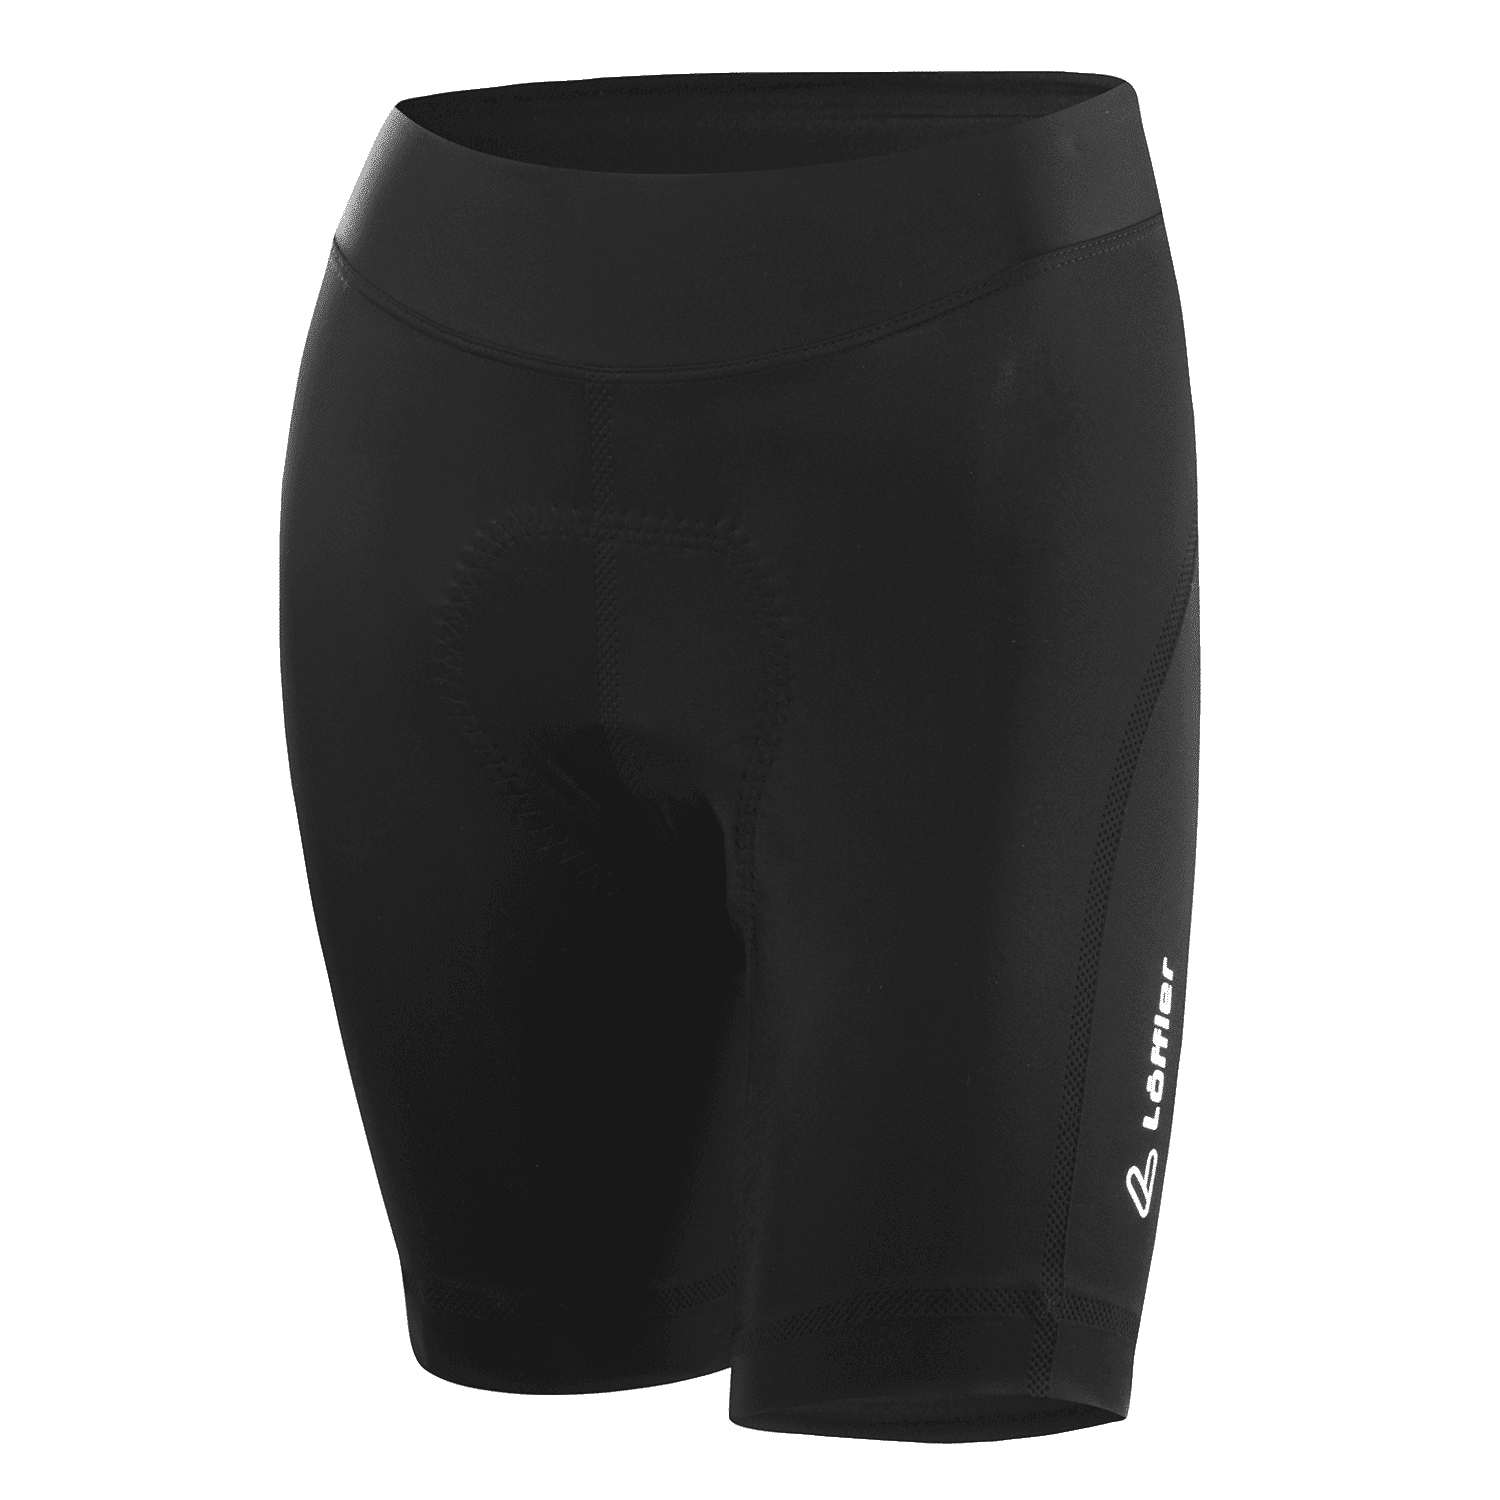 Löffler Bike Tights Hotbond - Cycling shorts - Women's